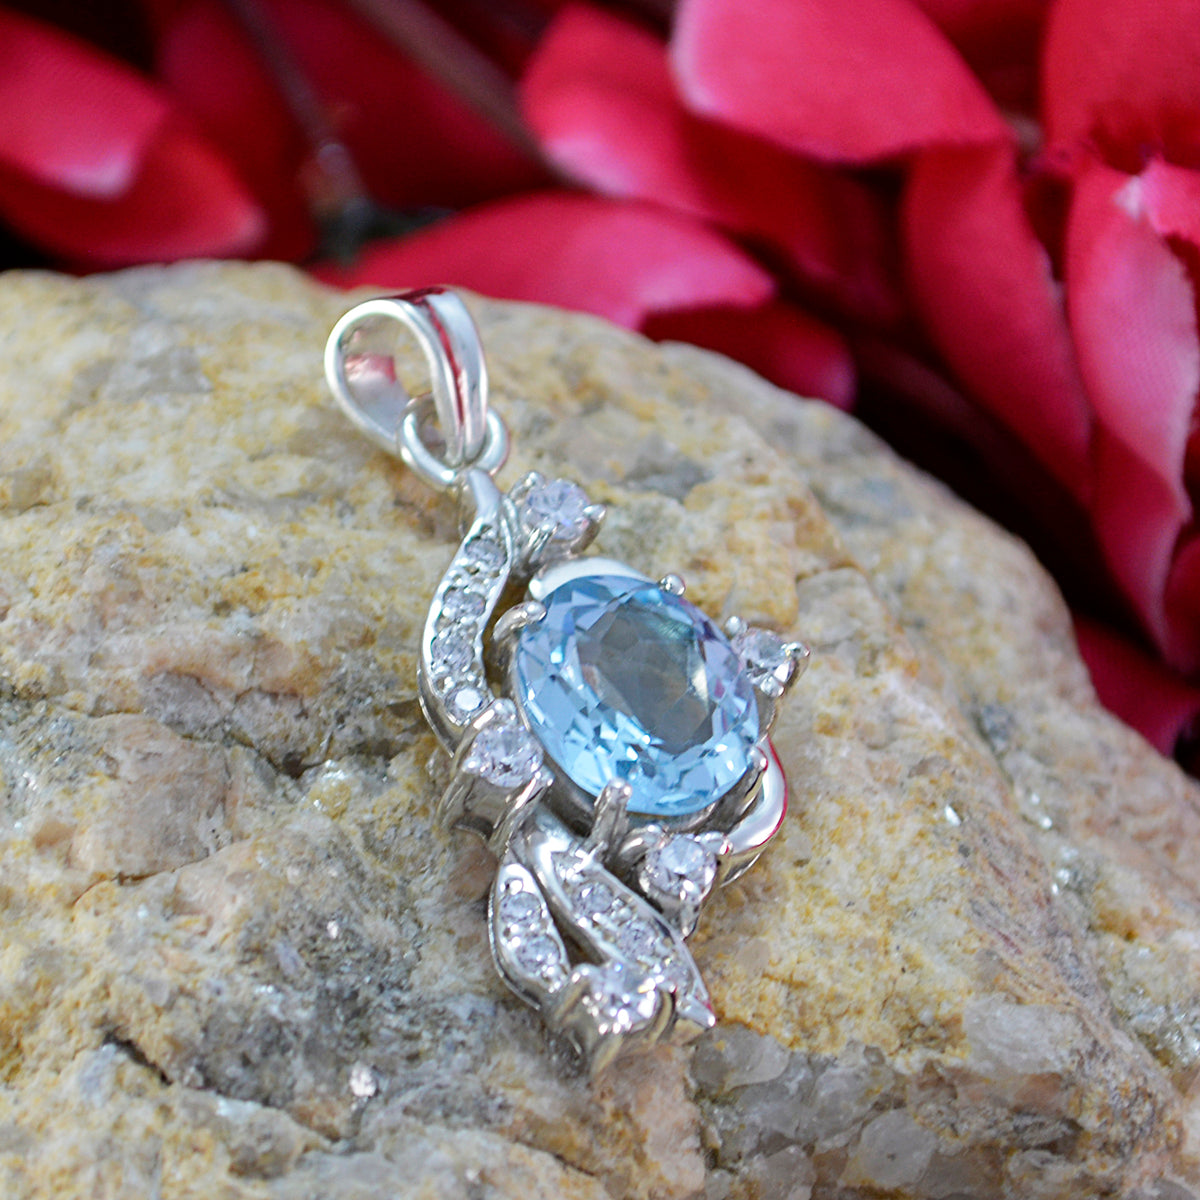 Riyo Genuine Gems Oval Faceted Blue Blue Topaz Sterling Silver Pendants gift for engagement